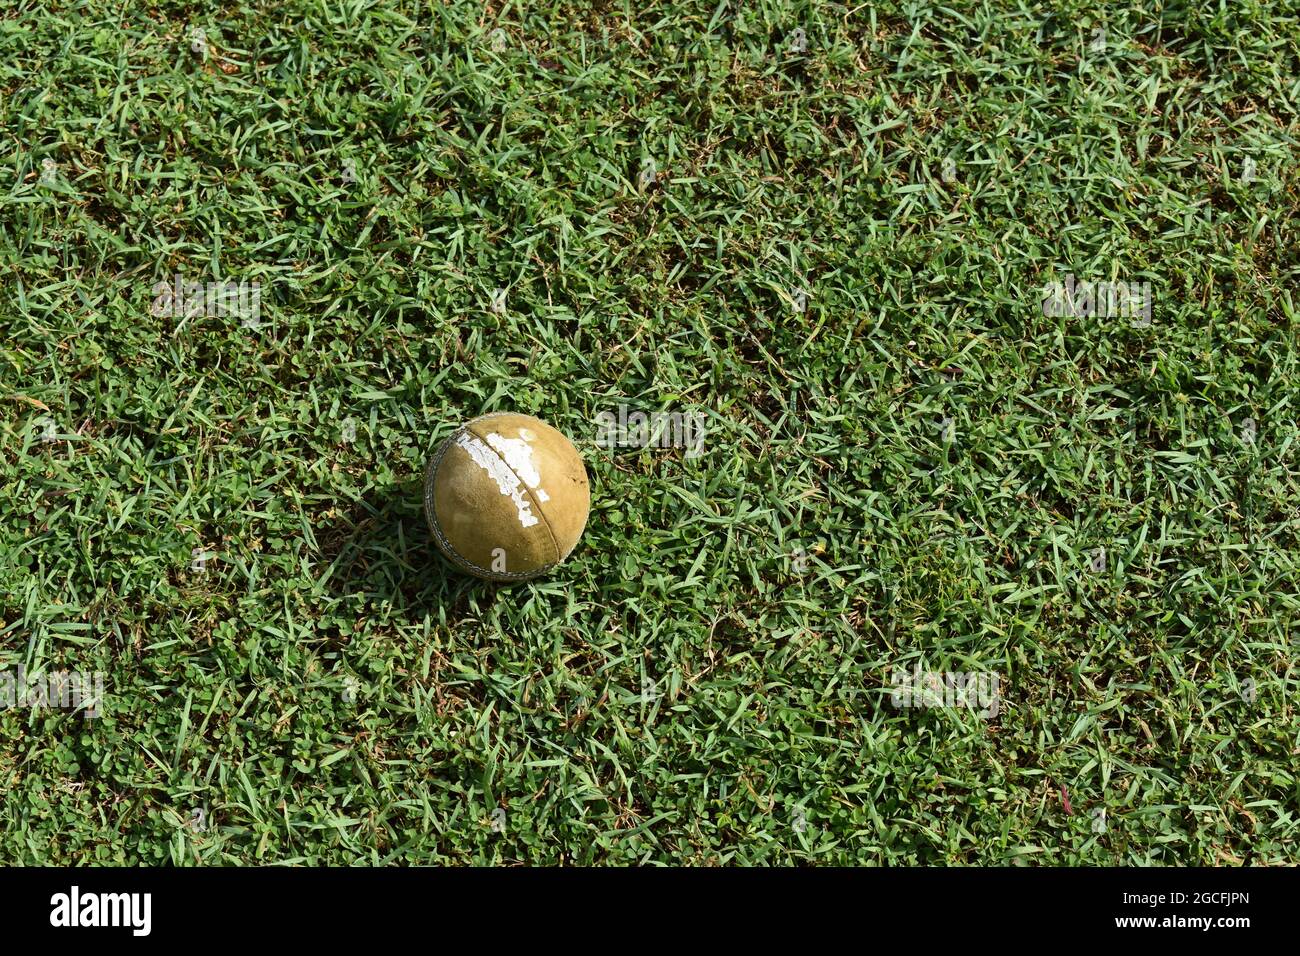 Una pelota de críquet usada tumbada en el suelo. Sri Lanka. Foto de stock